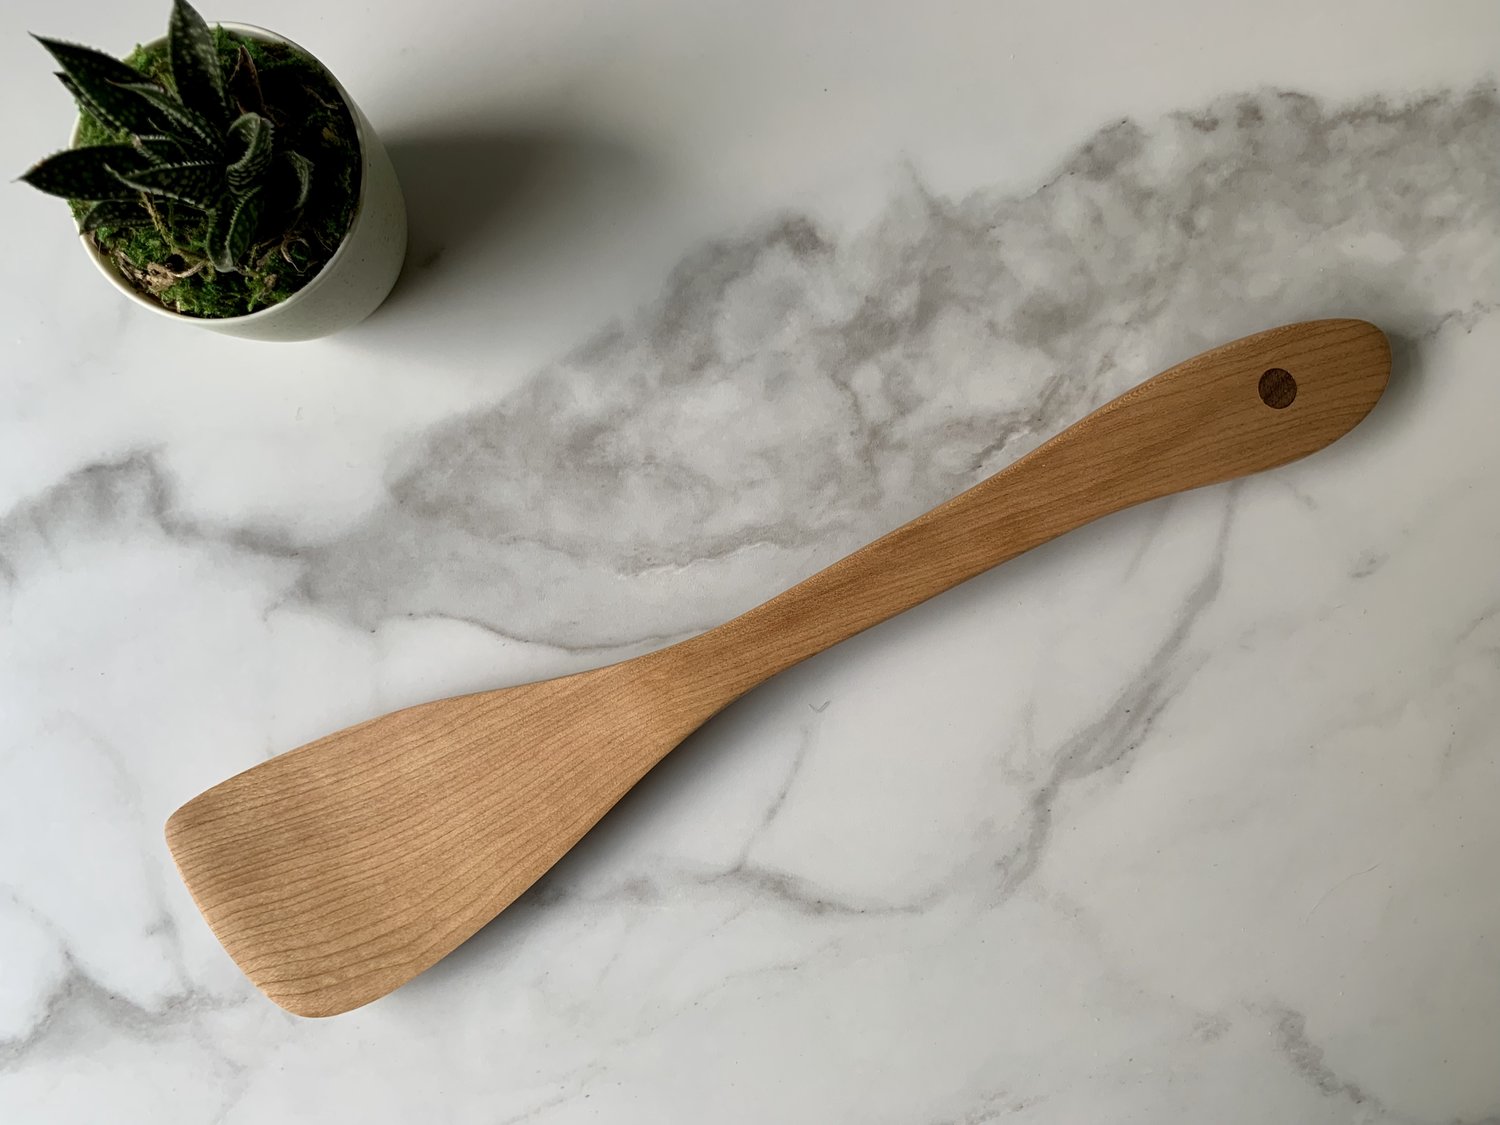 paddle blade Wooden spatula